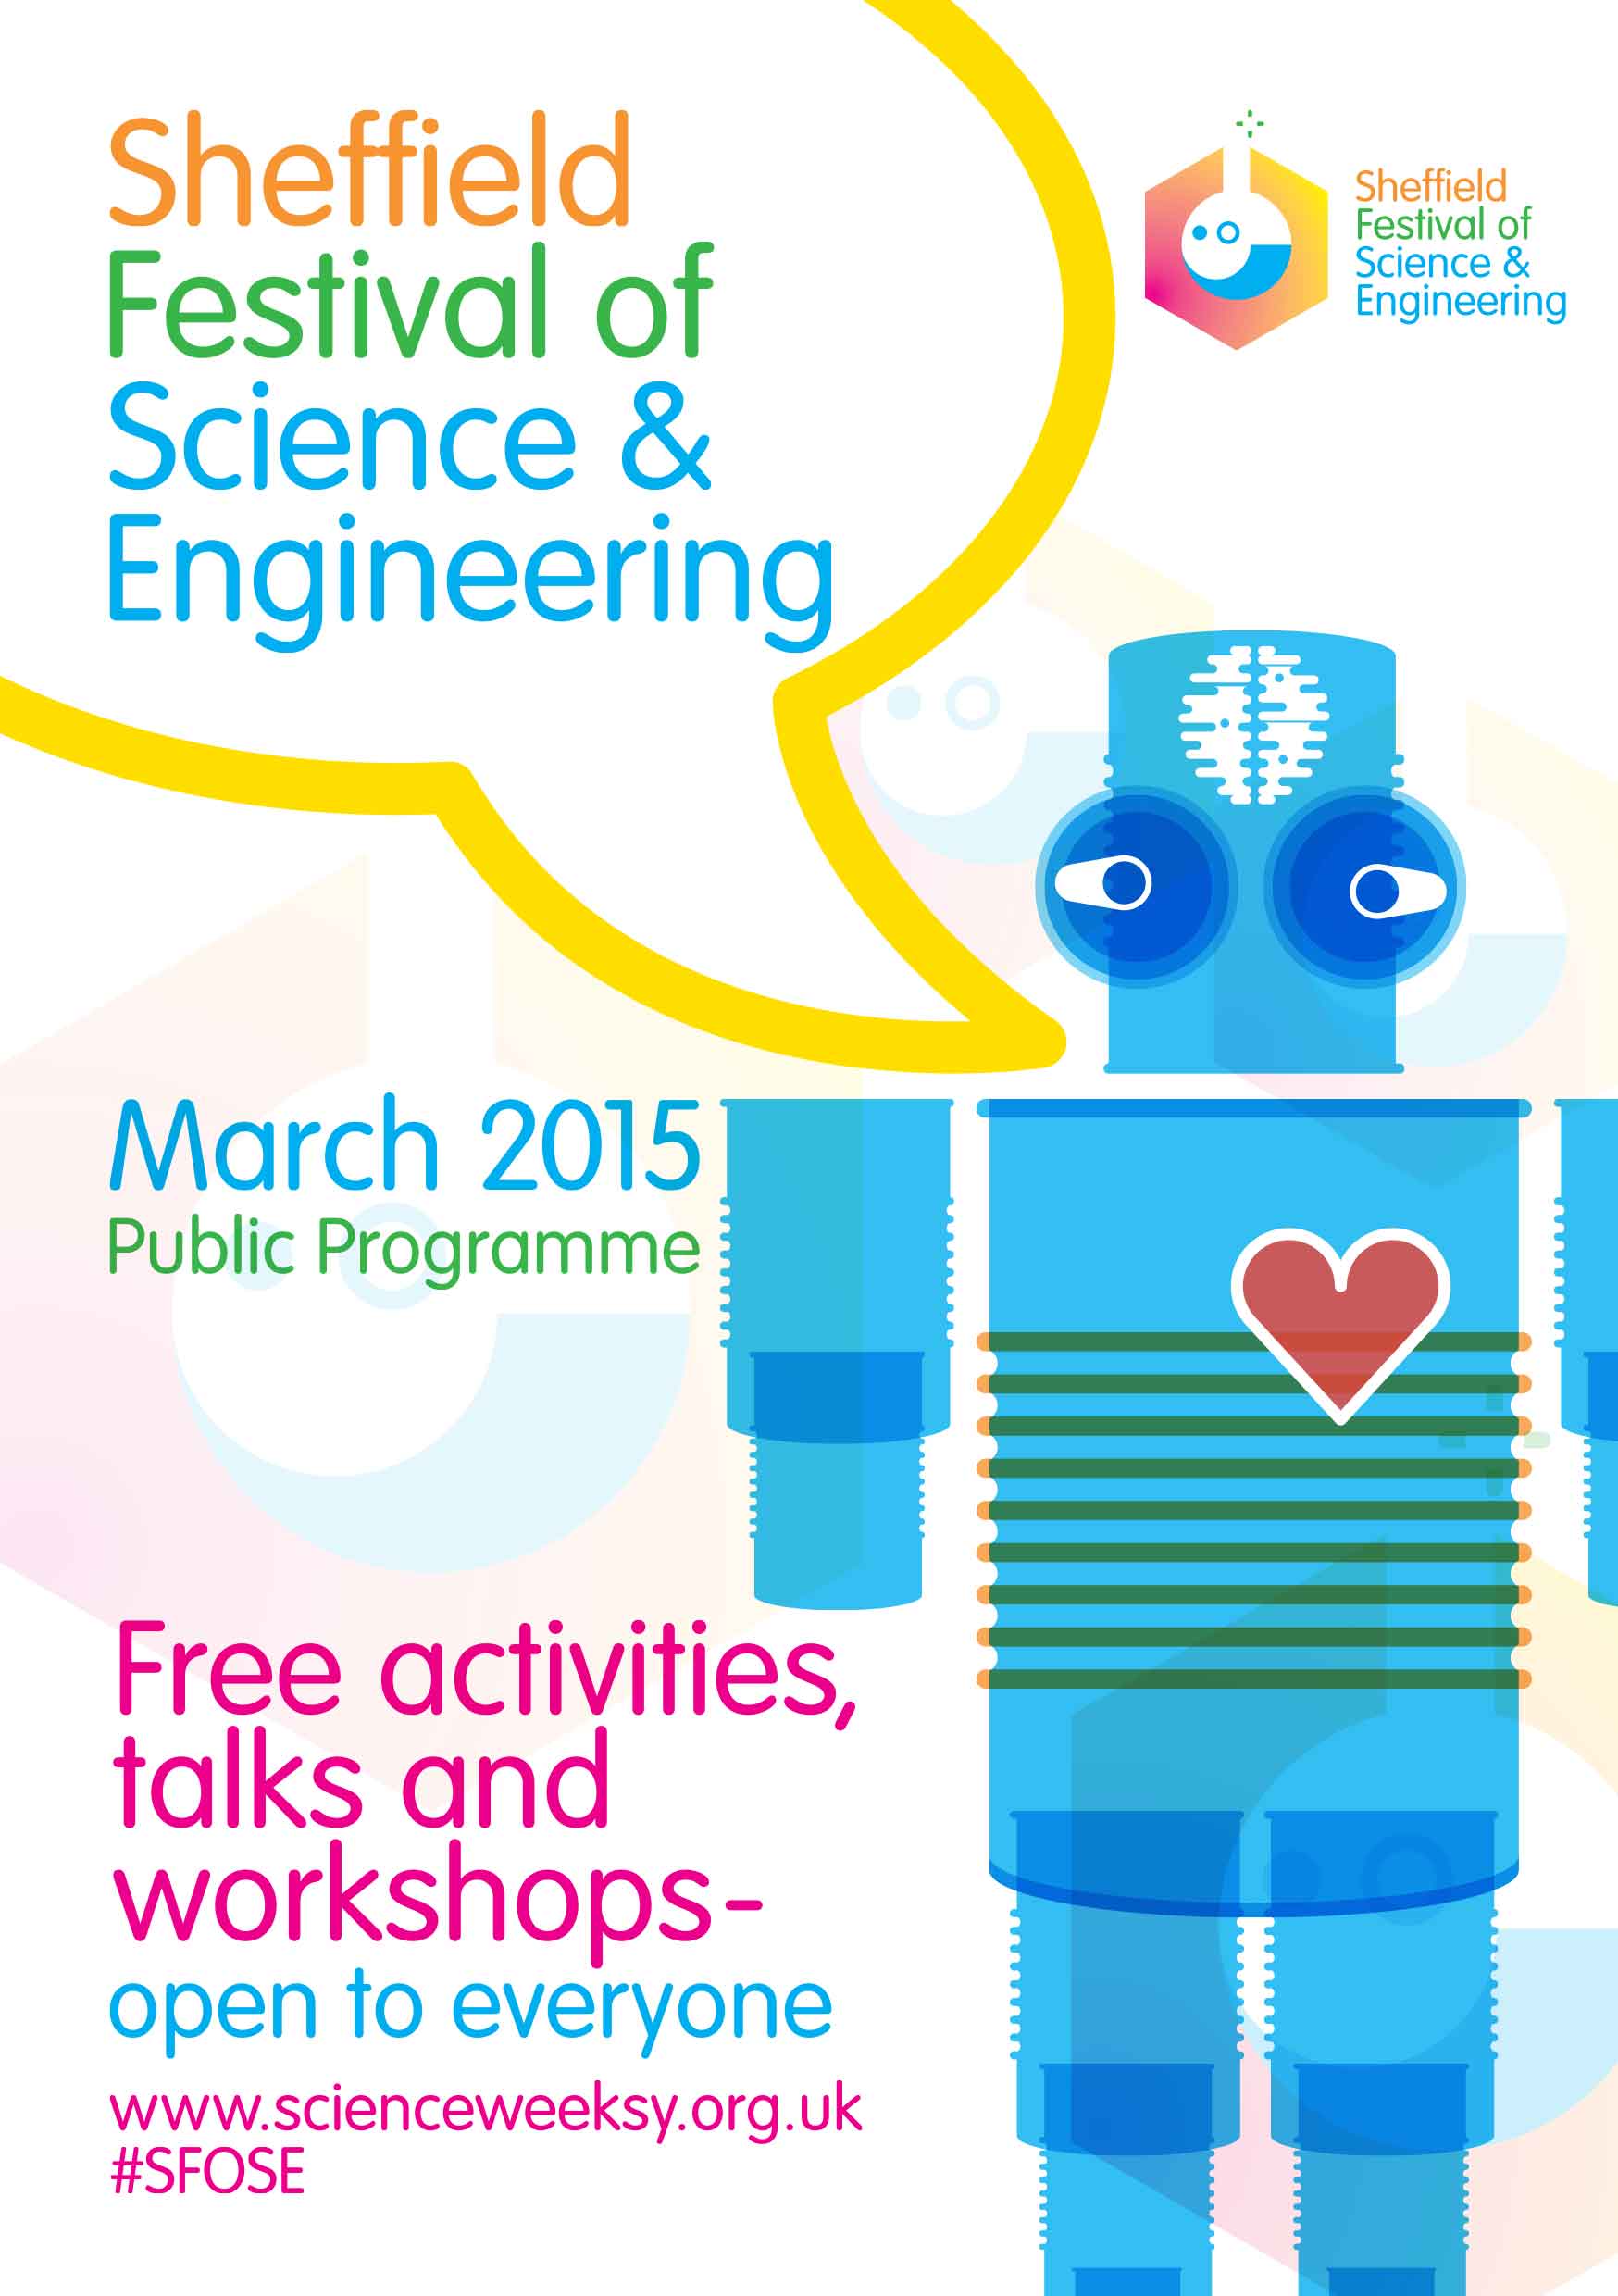 Sheffield Festival of Science & Engineering